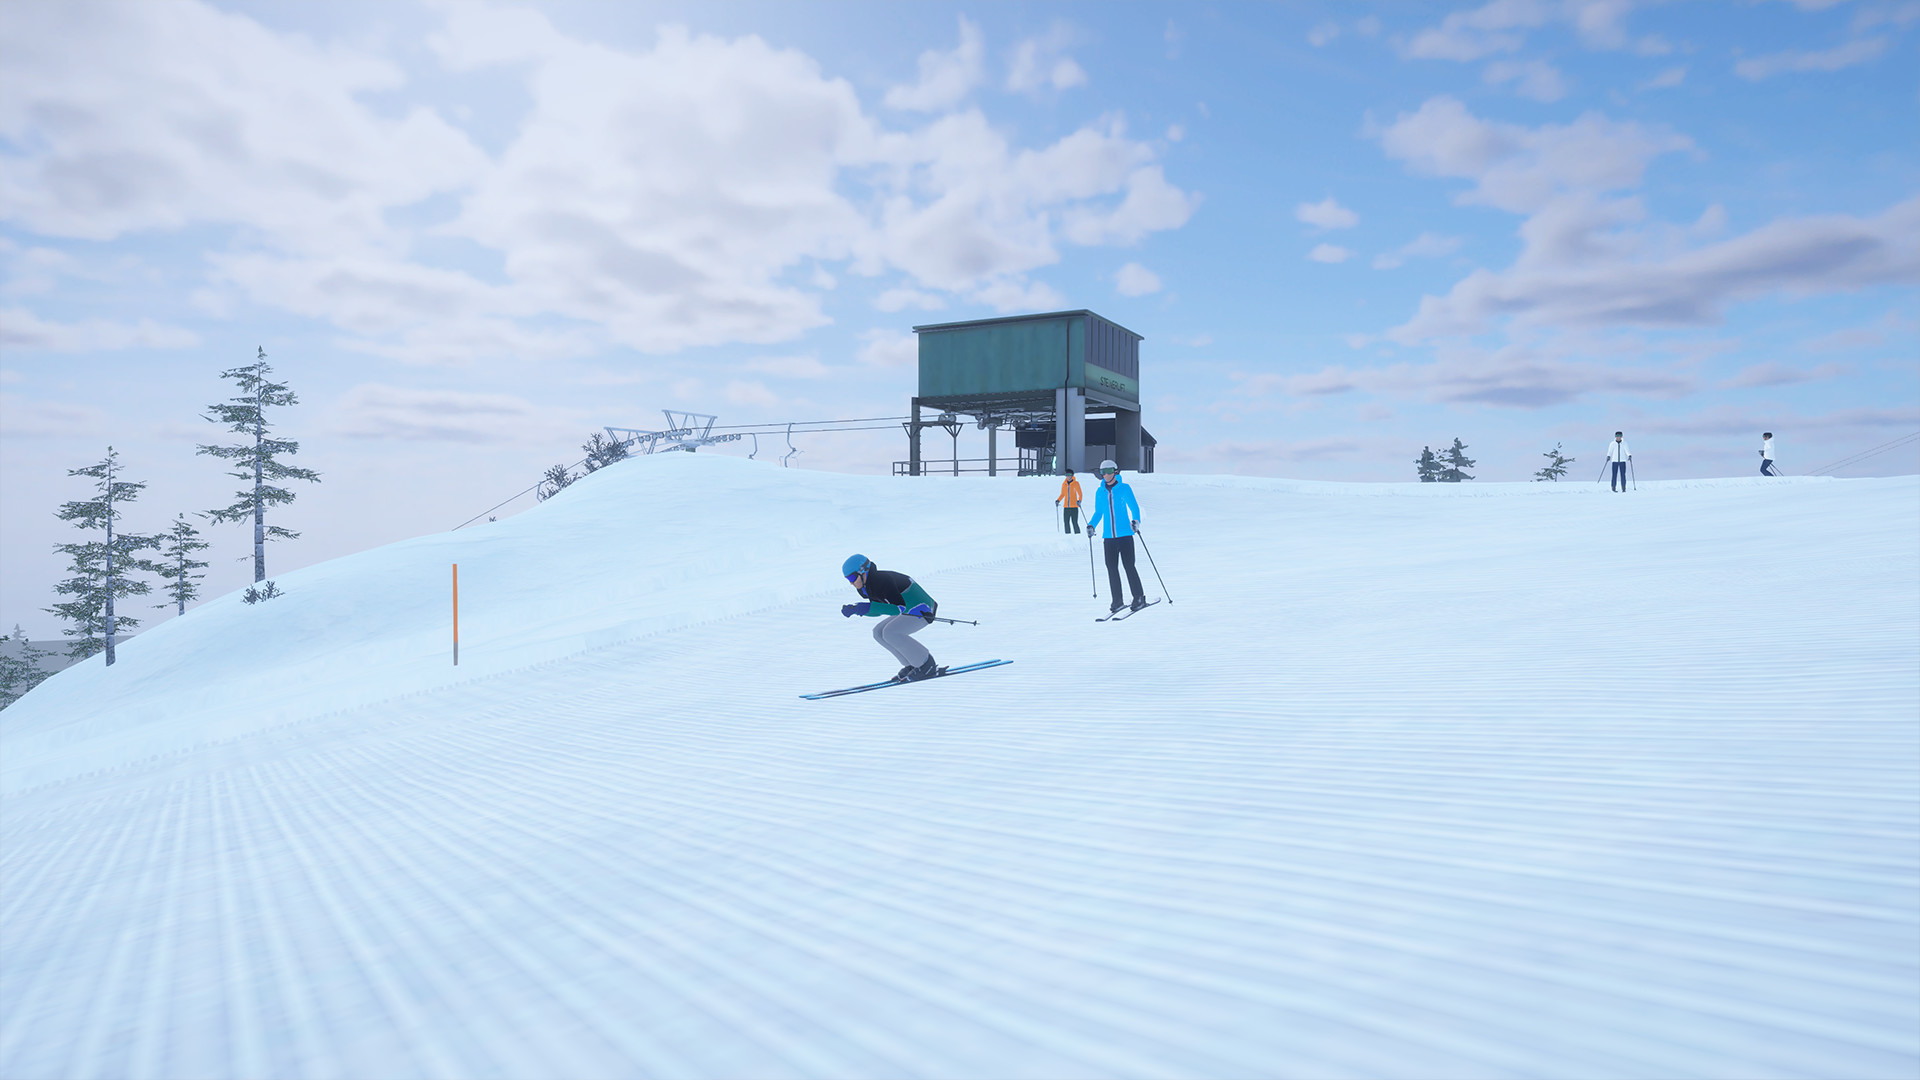 Alpine - The Simulation Game - screenshot 2